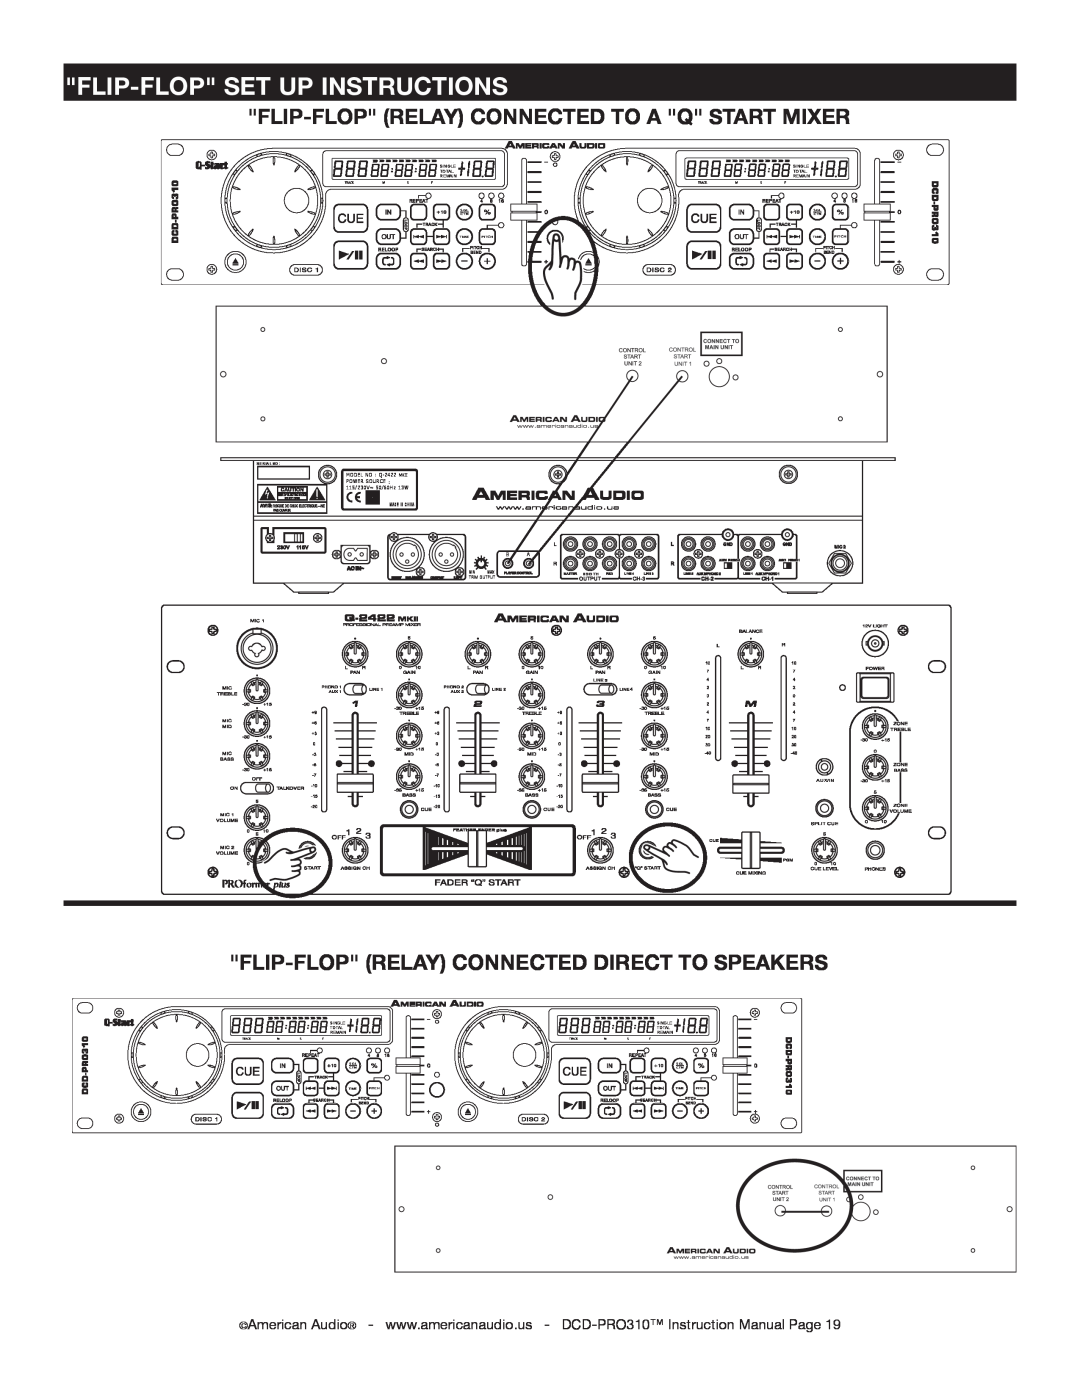 American Audio DCD-PRO310 Flip-Flopset Up Instructions, Flip-Floprelay Connected To A Q Start Mixer, MODEL NO Q-2422 MKII 